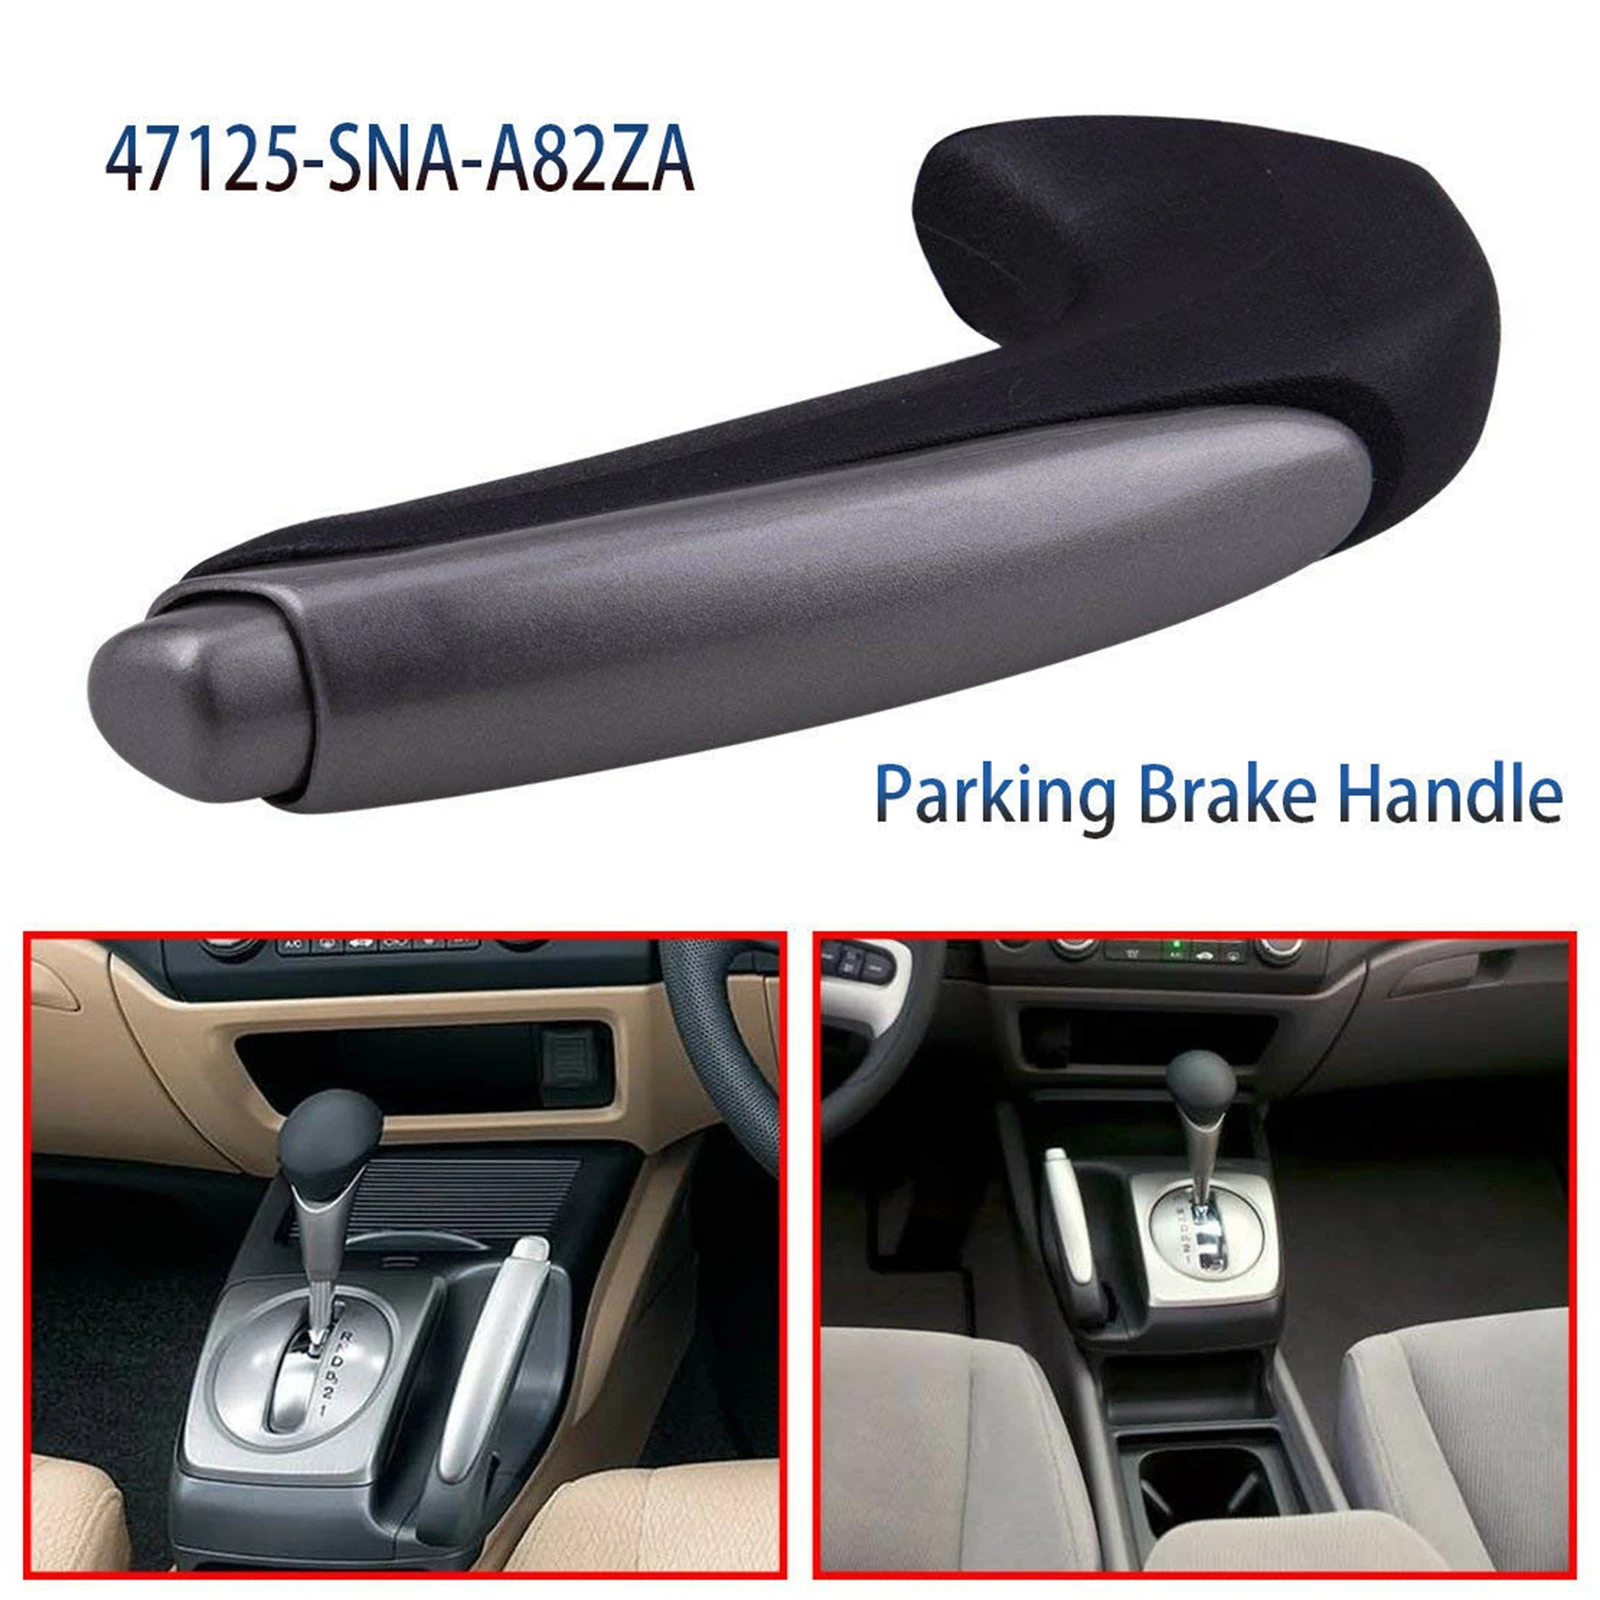 Emergency Auto Car Parking Brake Handle Sleeve Protector Lever Cover Repair Kit for Honda 2006-2011